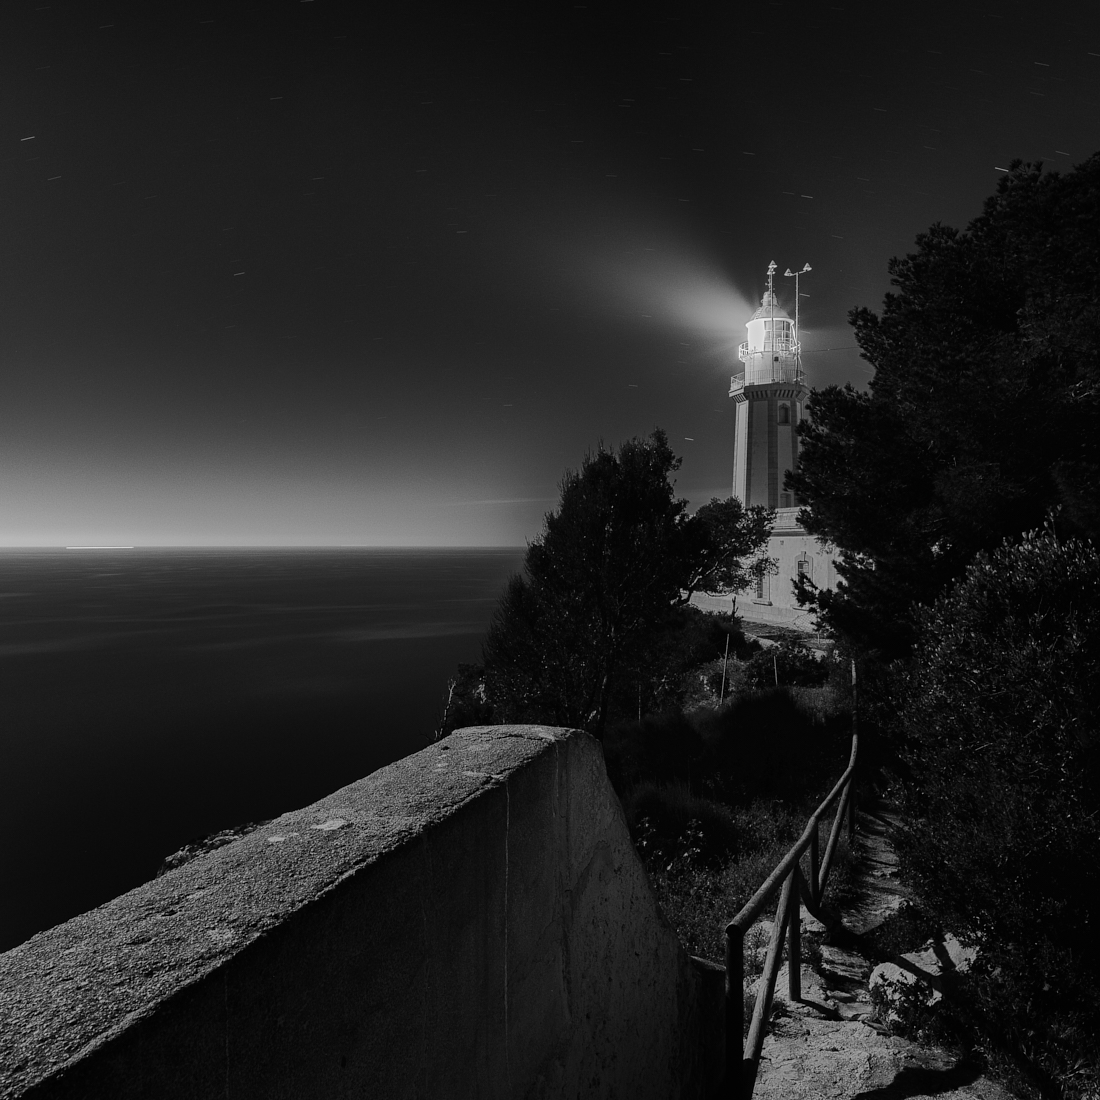 Javea Night View on the Mediterranean Sea